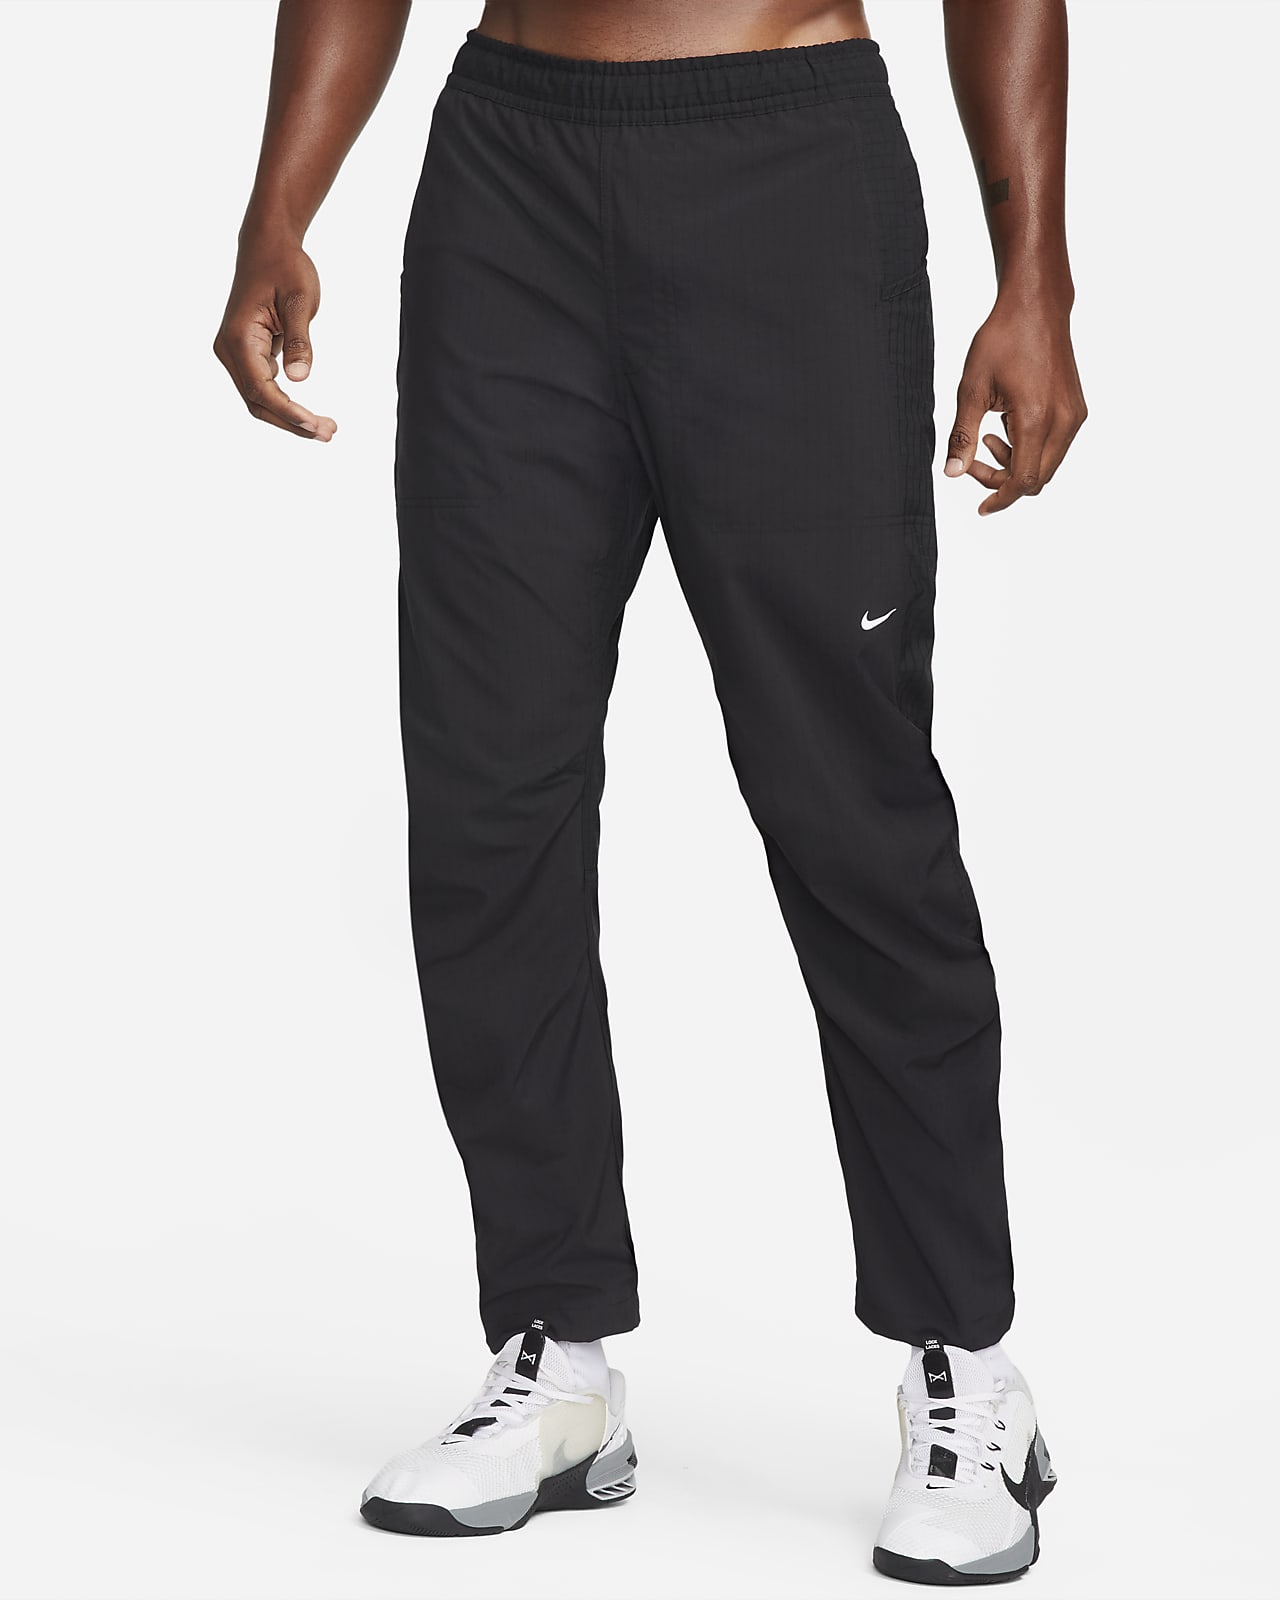 speelgoed Productie Conciërge Nike Dri-FIT ADV A.P.S. Men's Woven Fitness Trousers. Nike LU